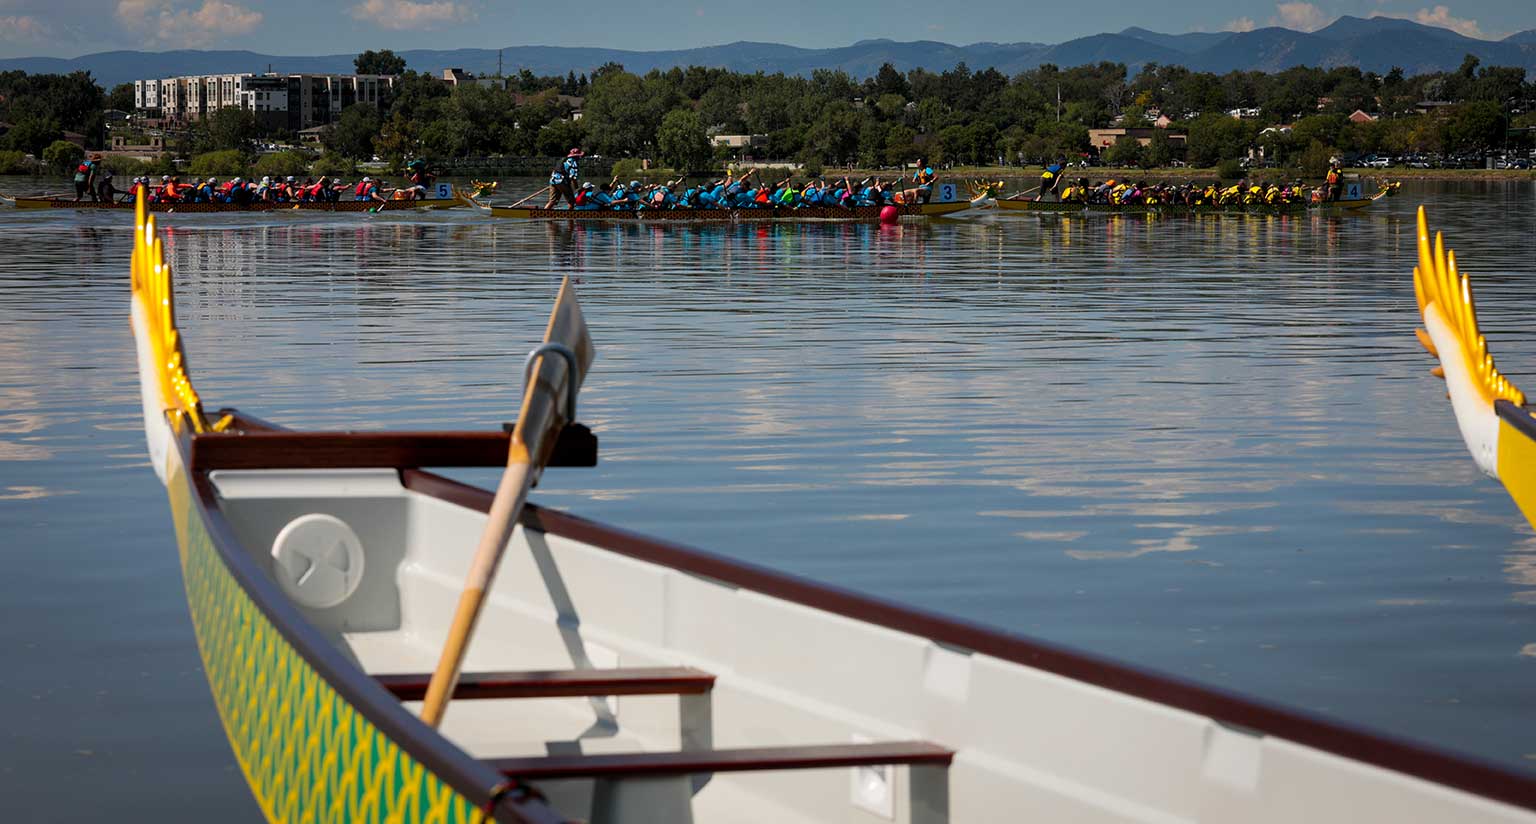 Dragon boat racing practice on a warm spring morning at Lake